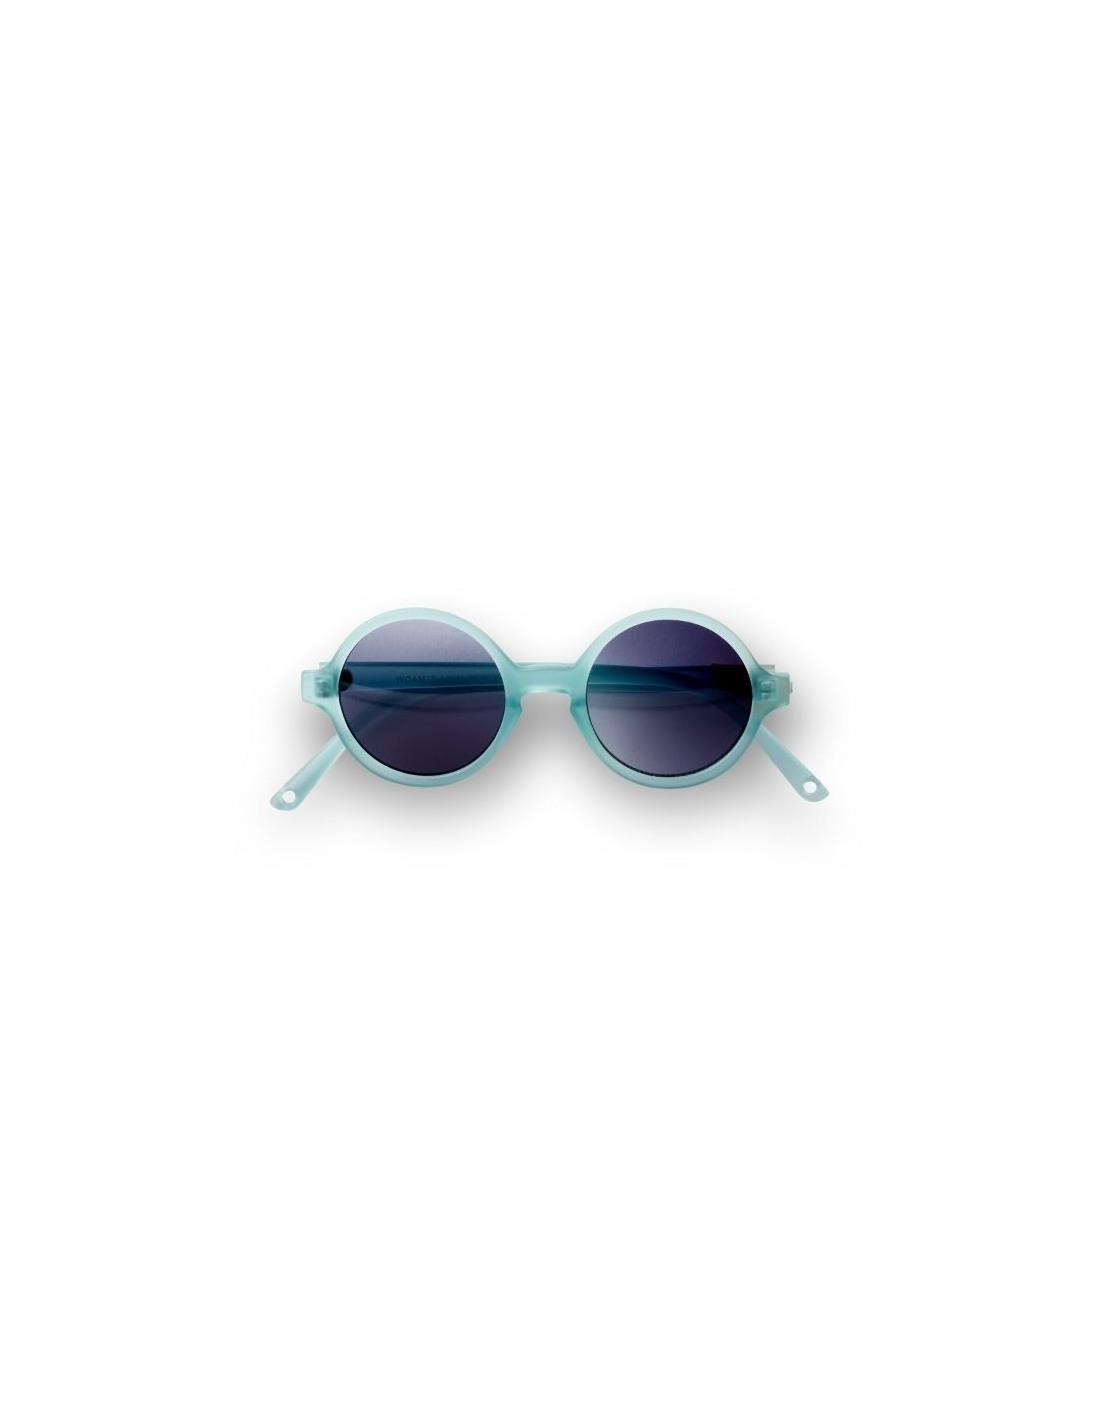 Gafas de sol redondas (azul semitrasparentes) WOAM de Ki ET LA 